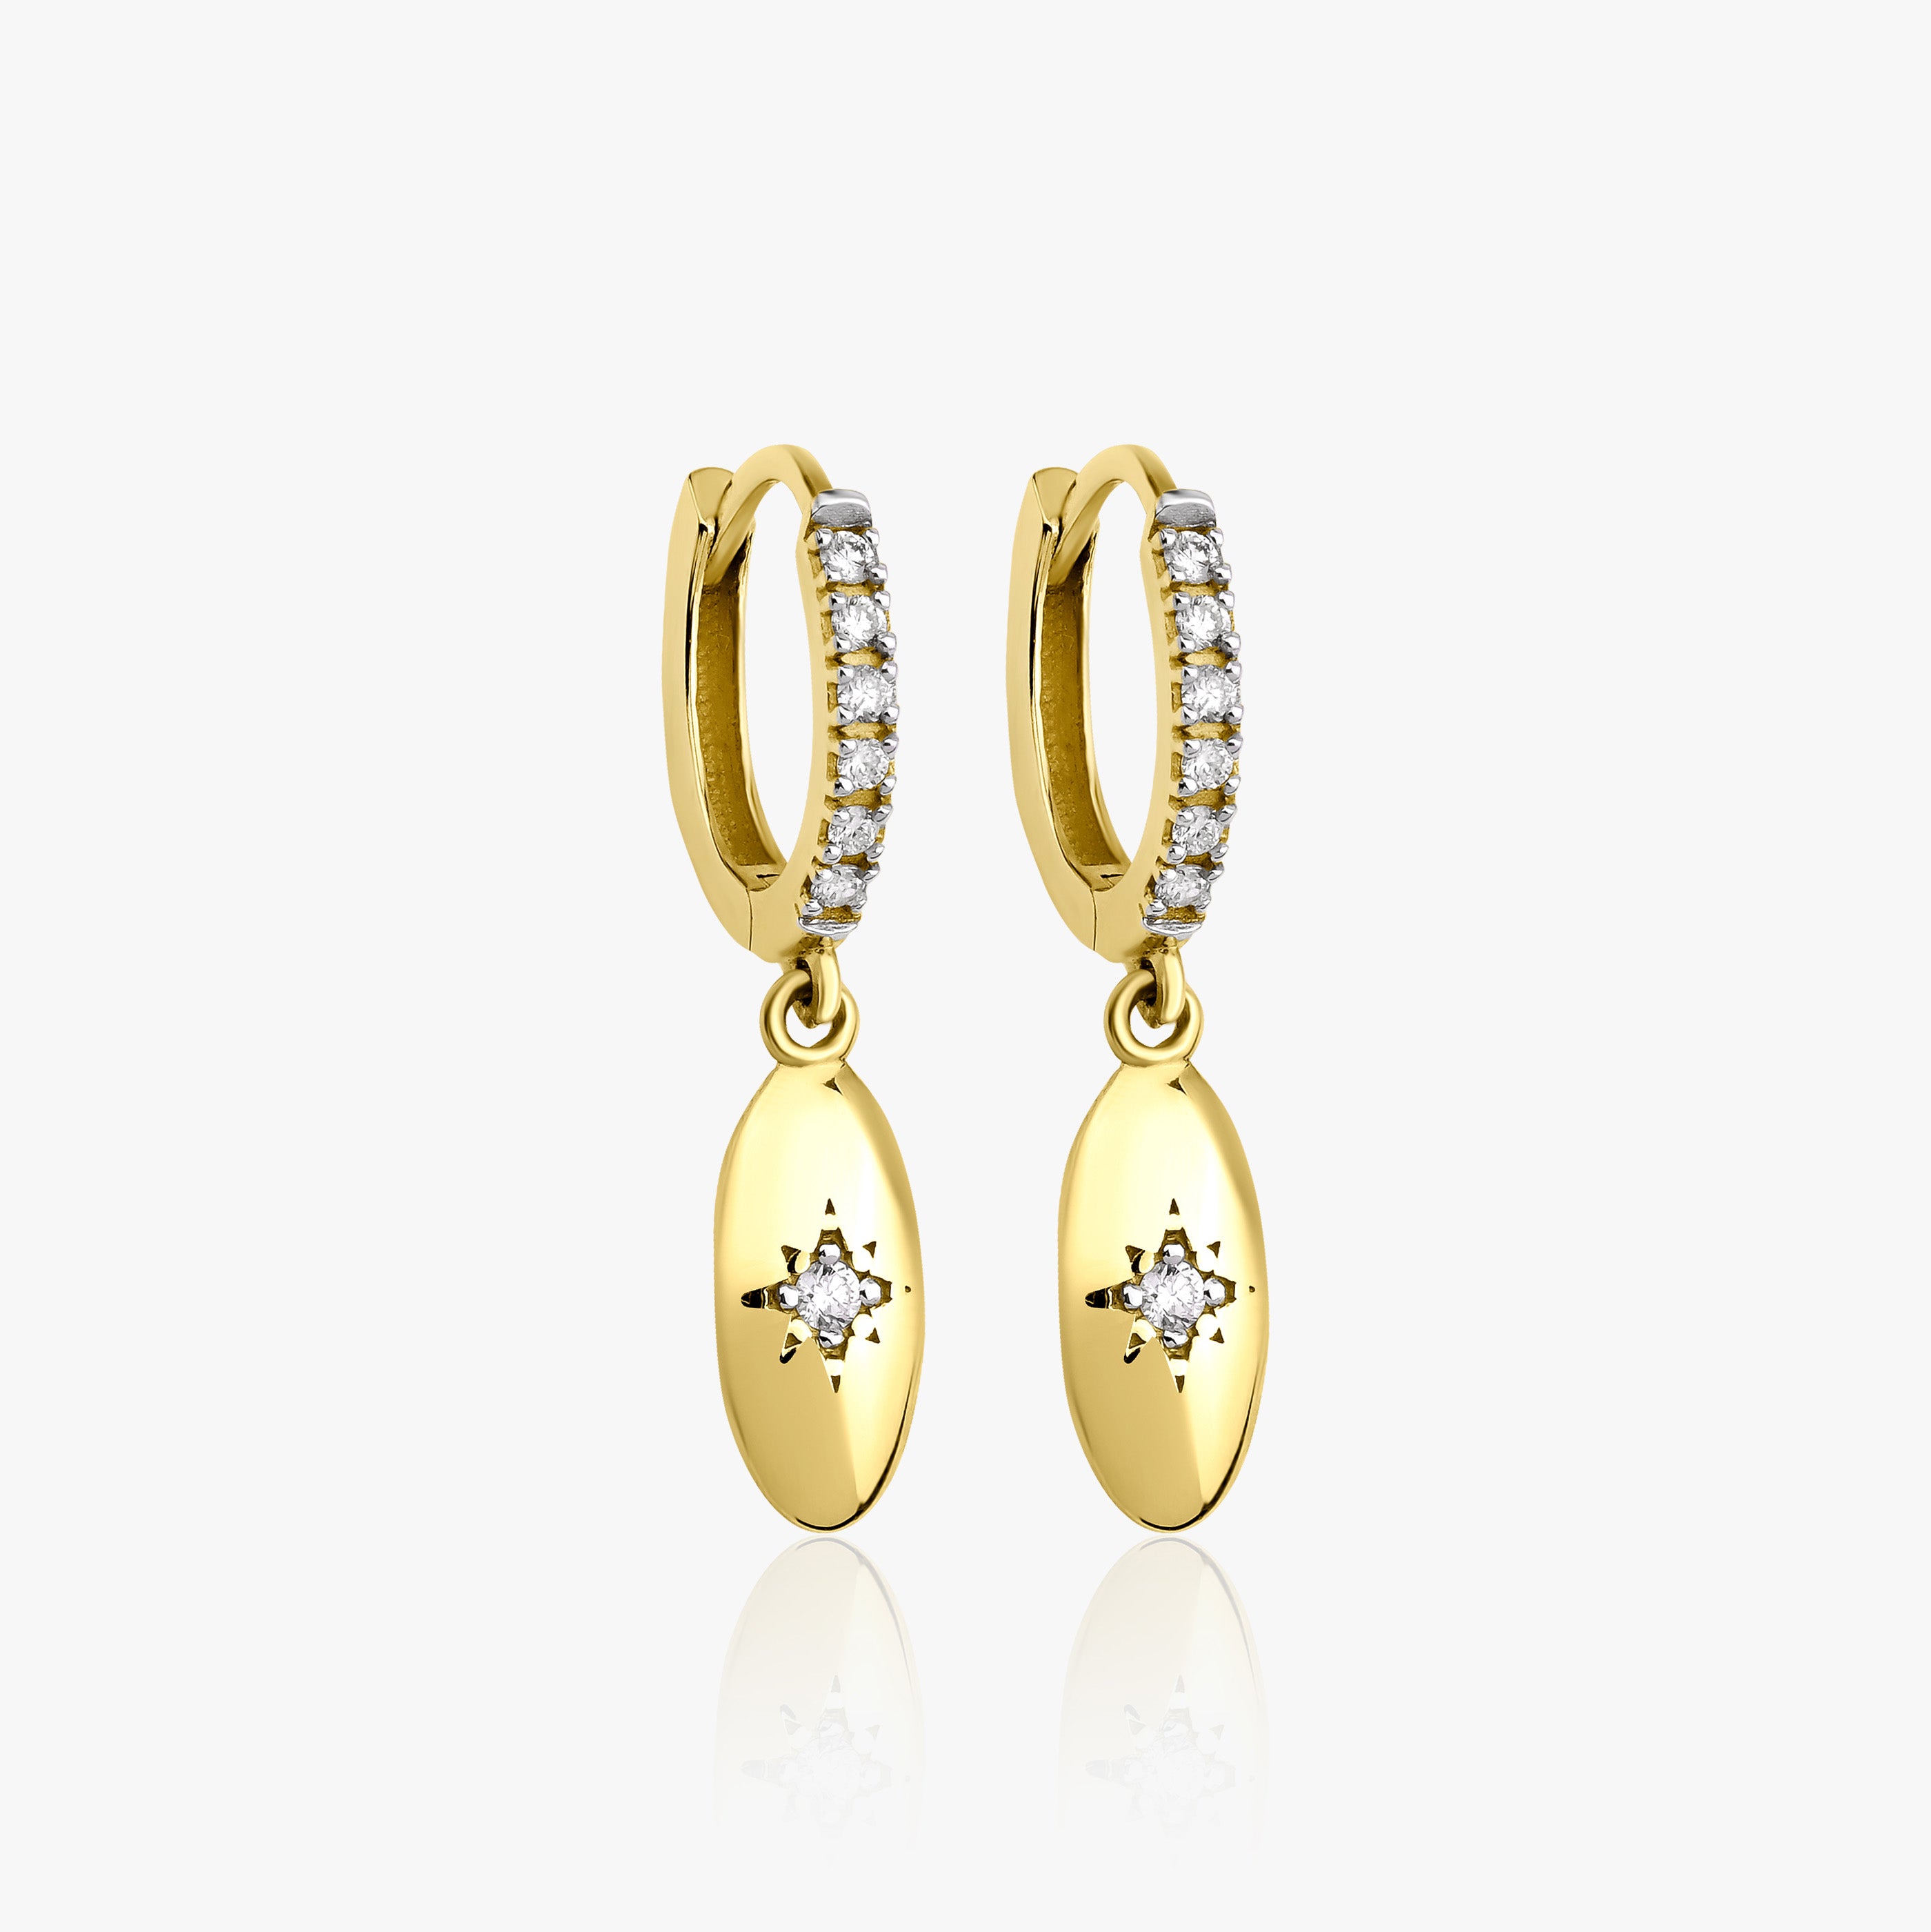 North Star Dangle Earrings in 14K Gold